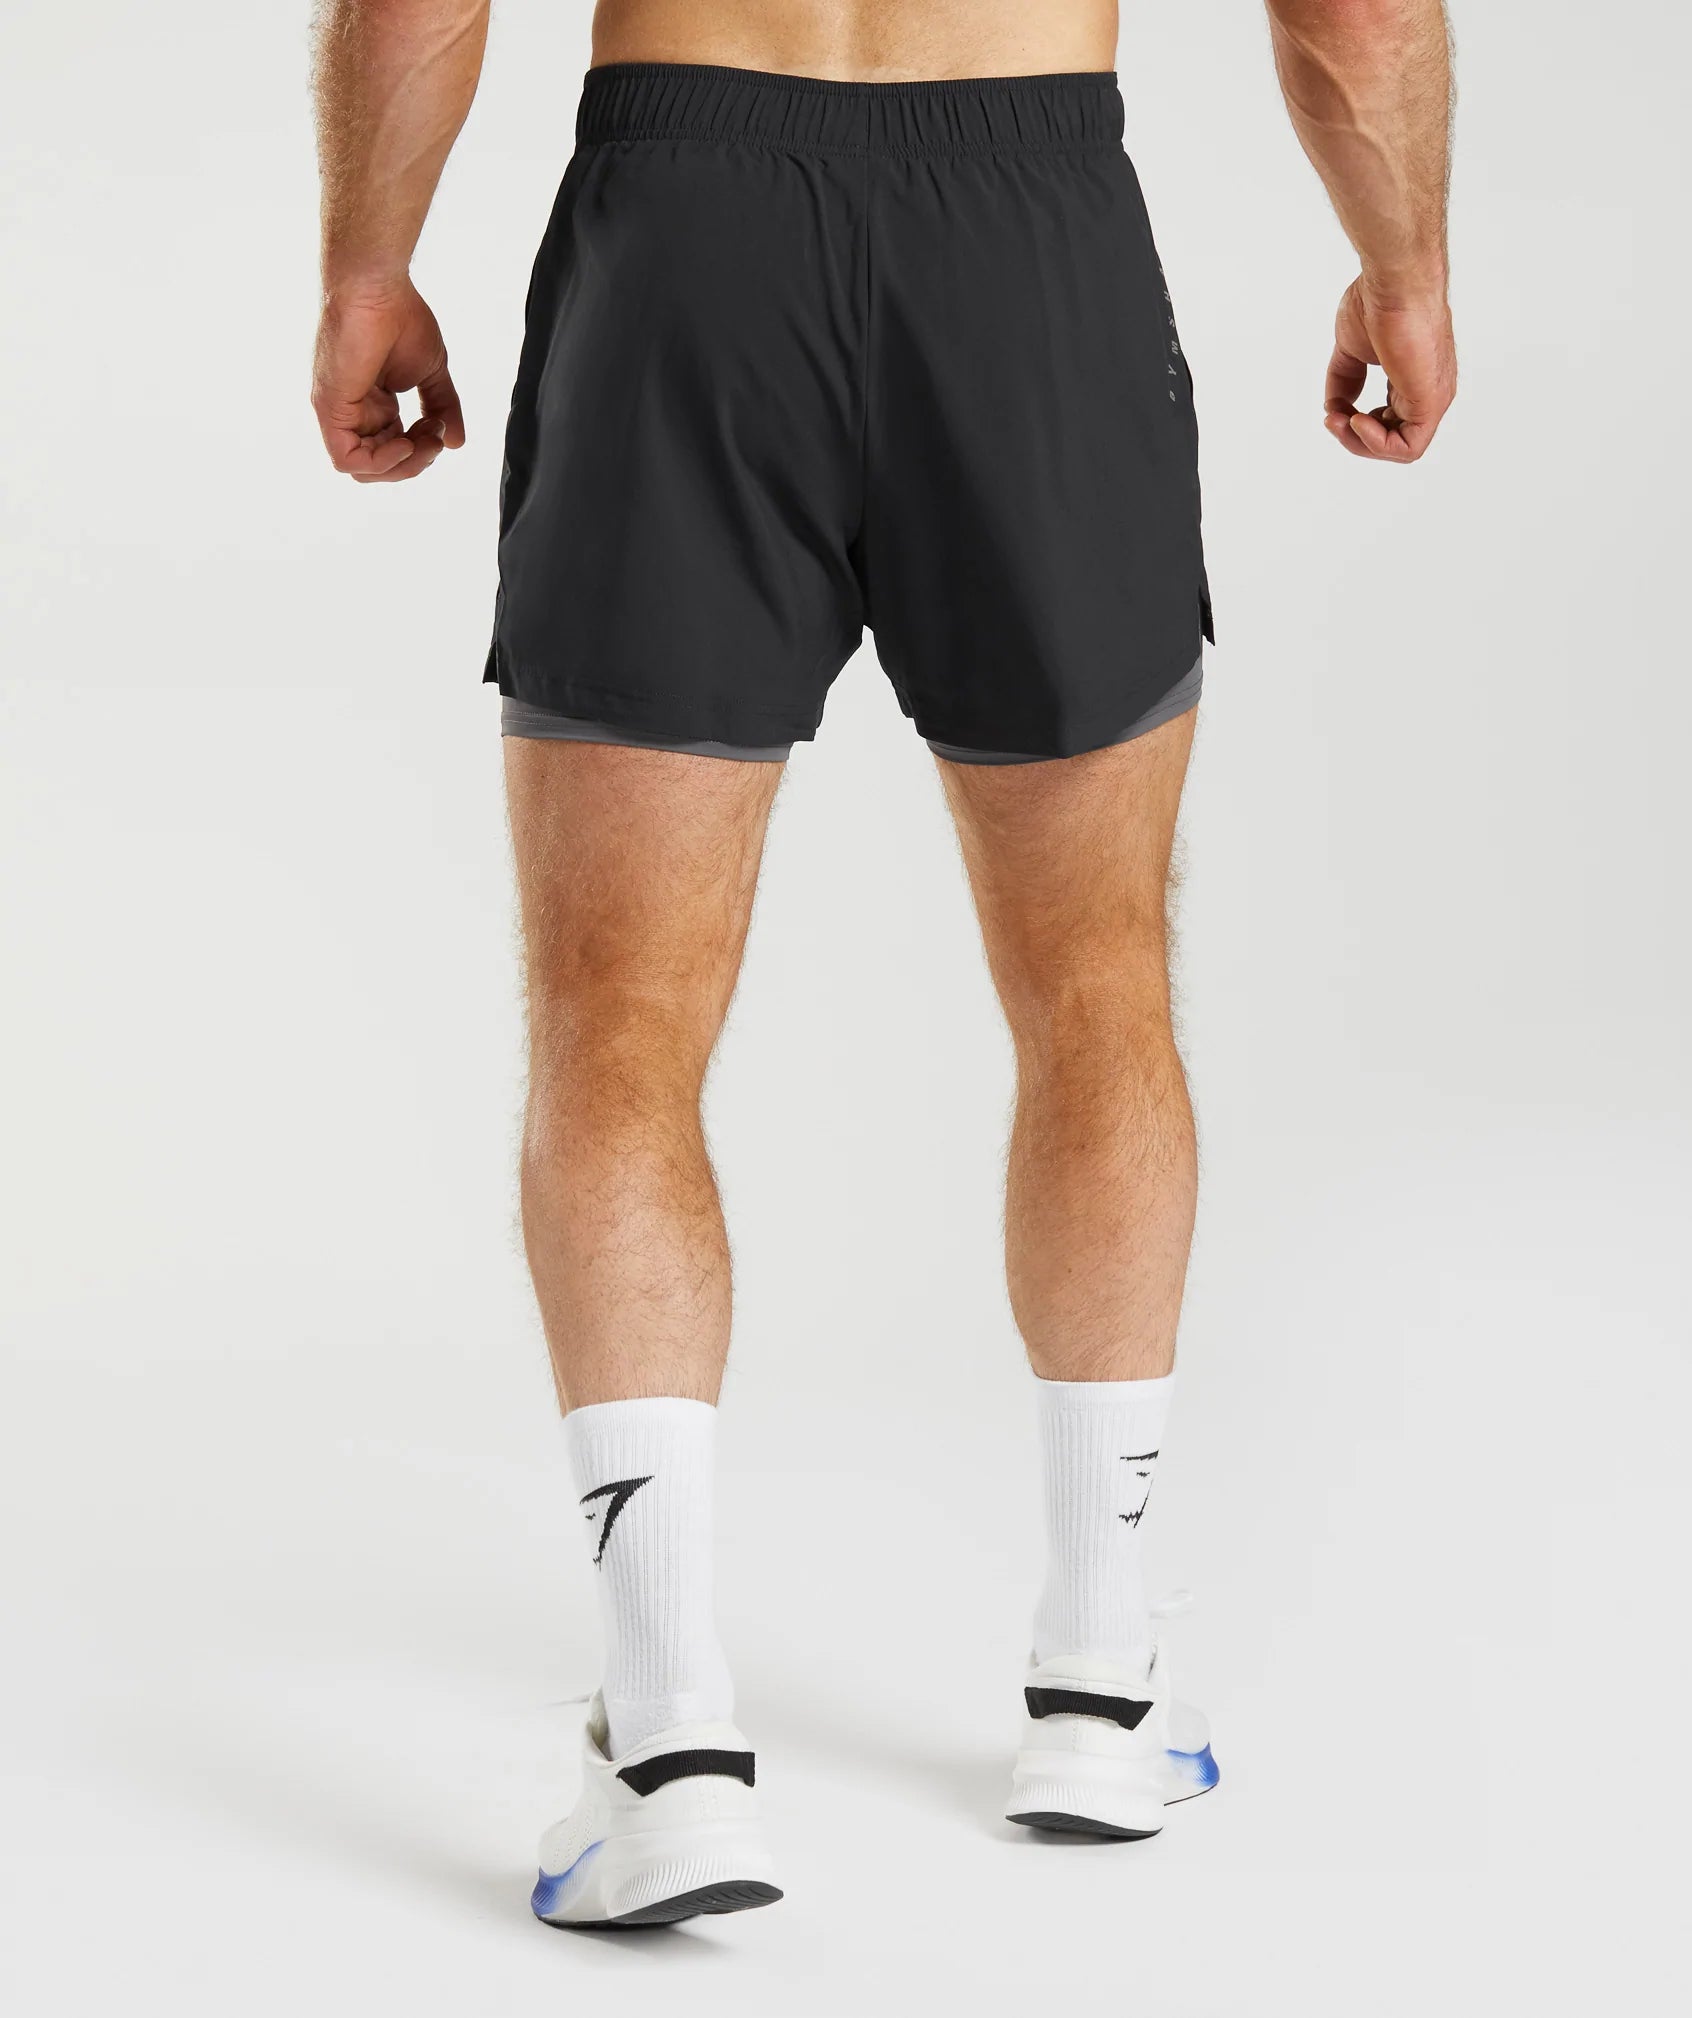 Sports Shorts for Men, Men's Running Shorts